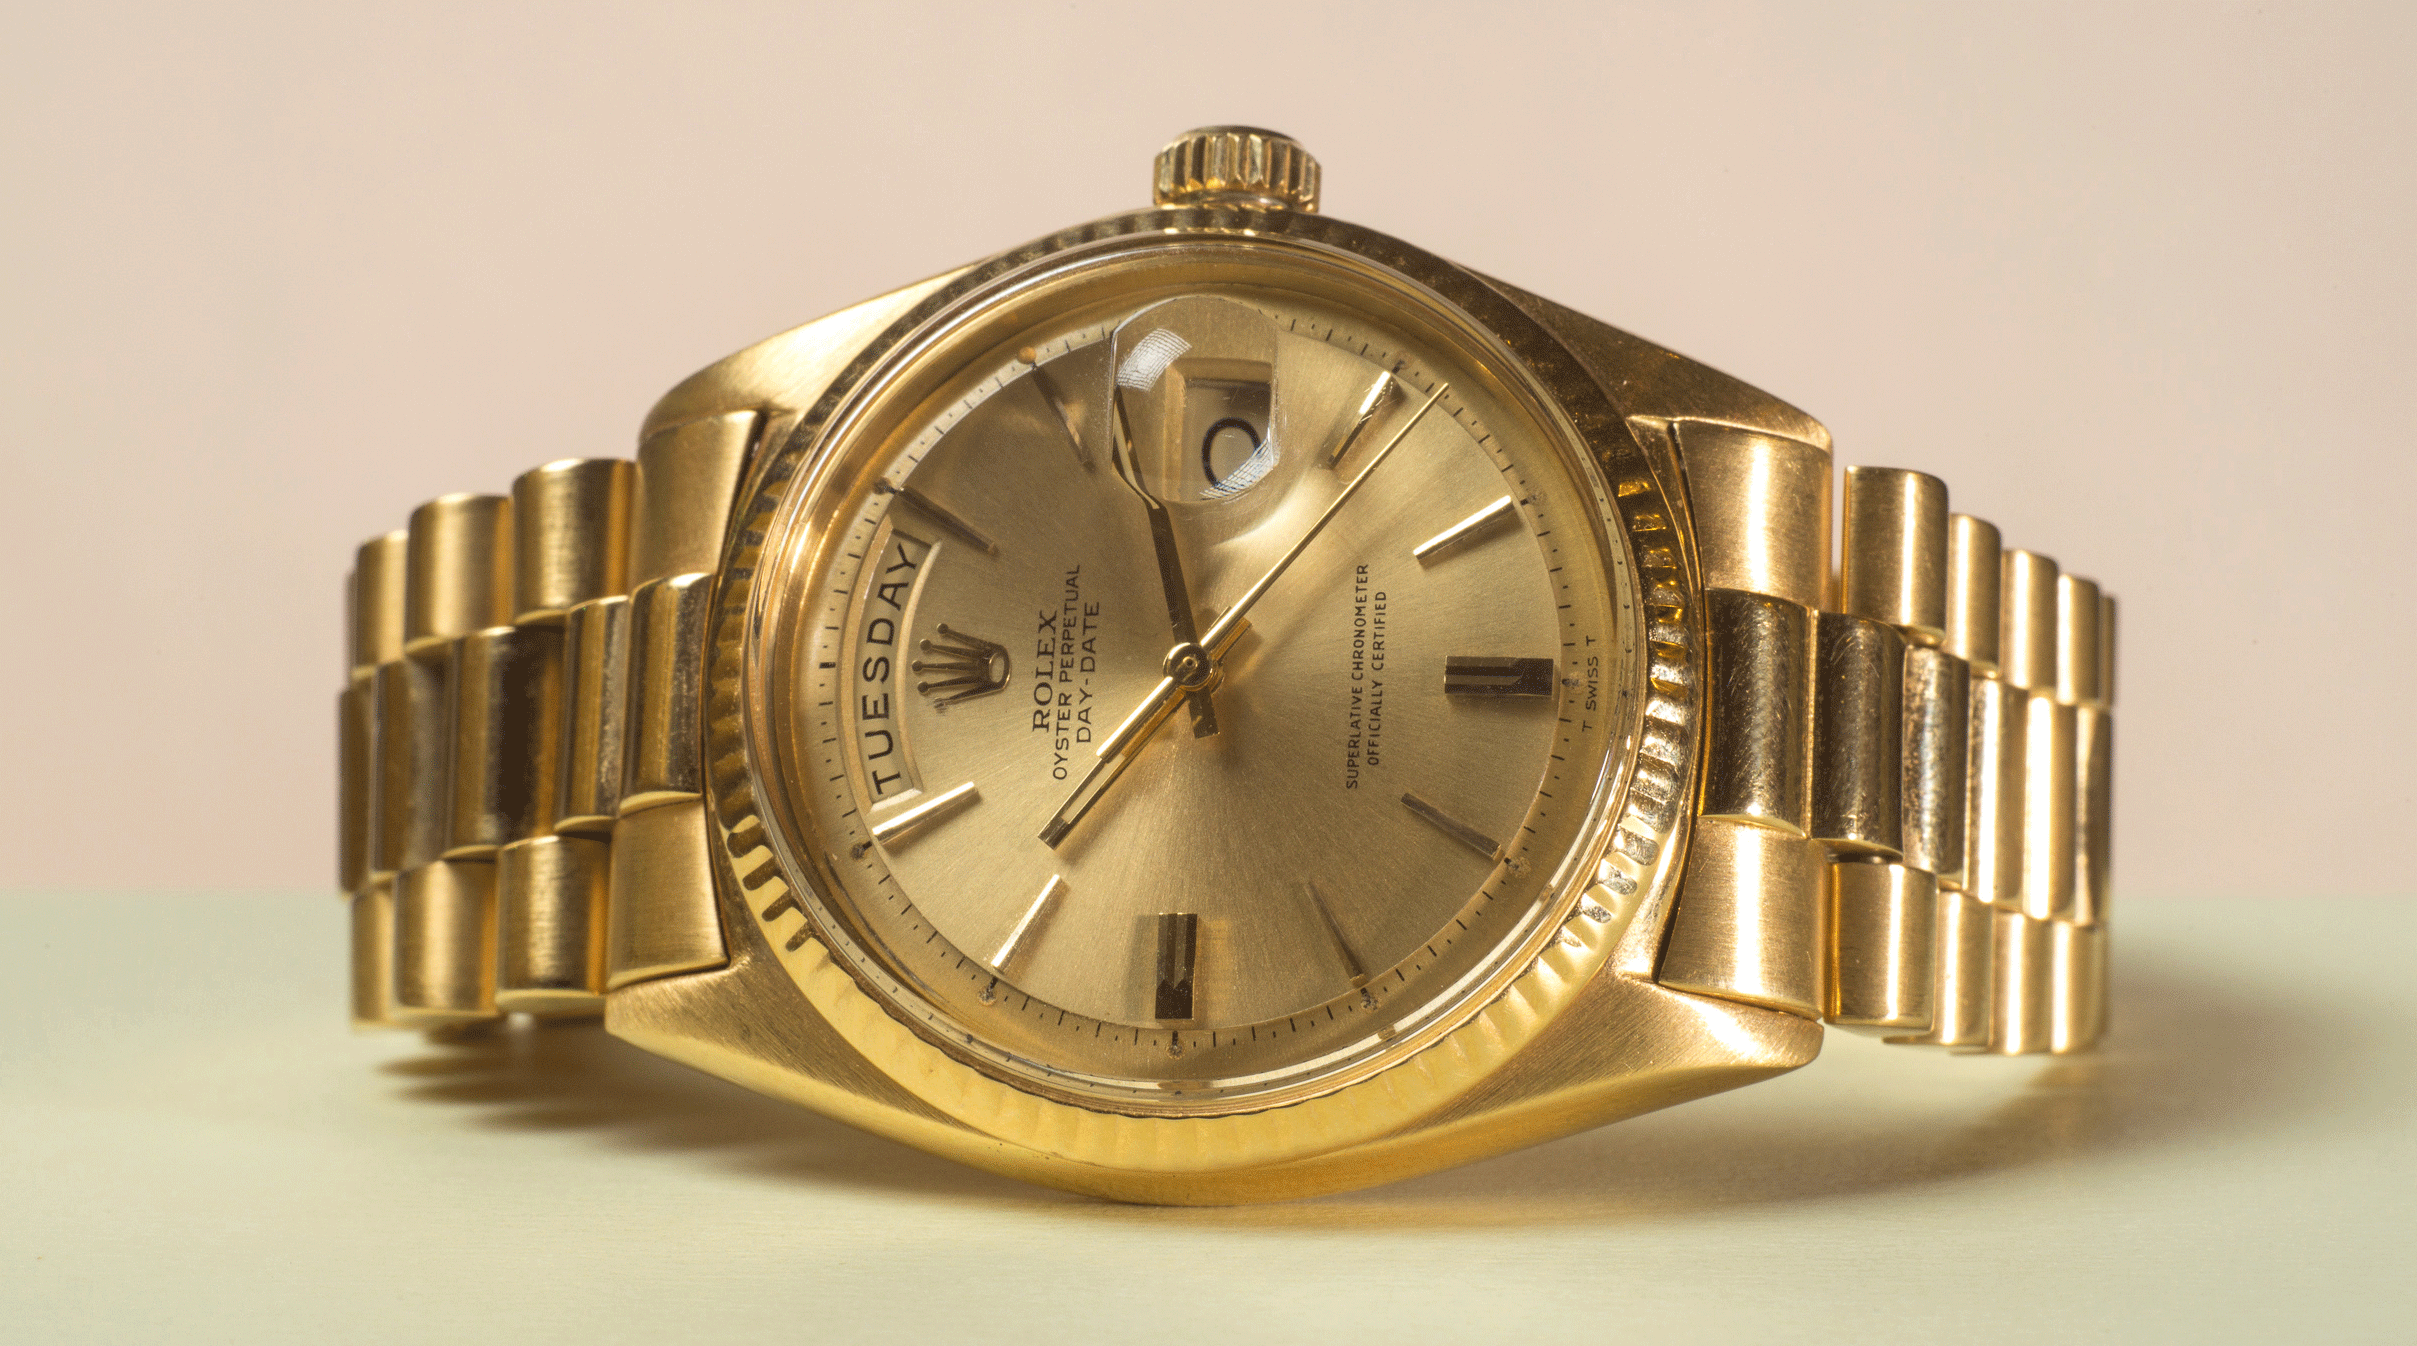 Jack Nicklaus's signature Rolex watch 